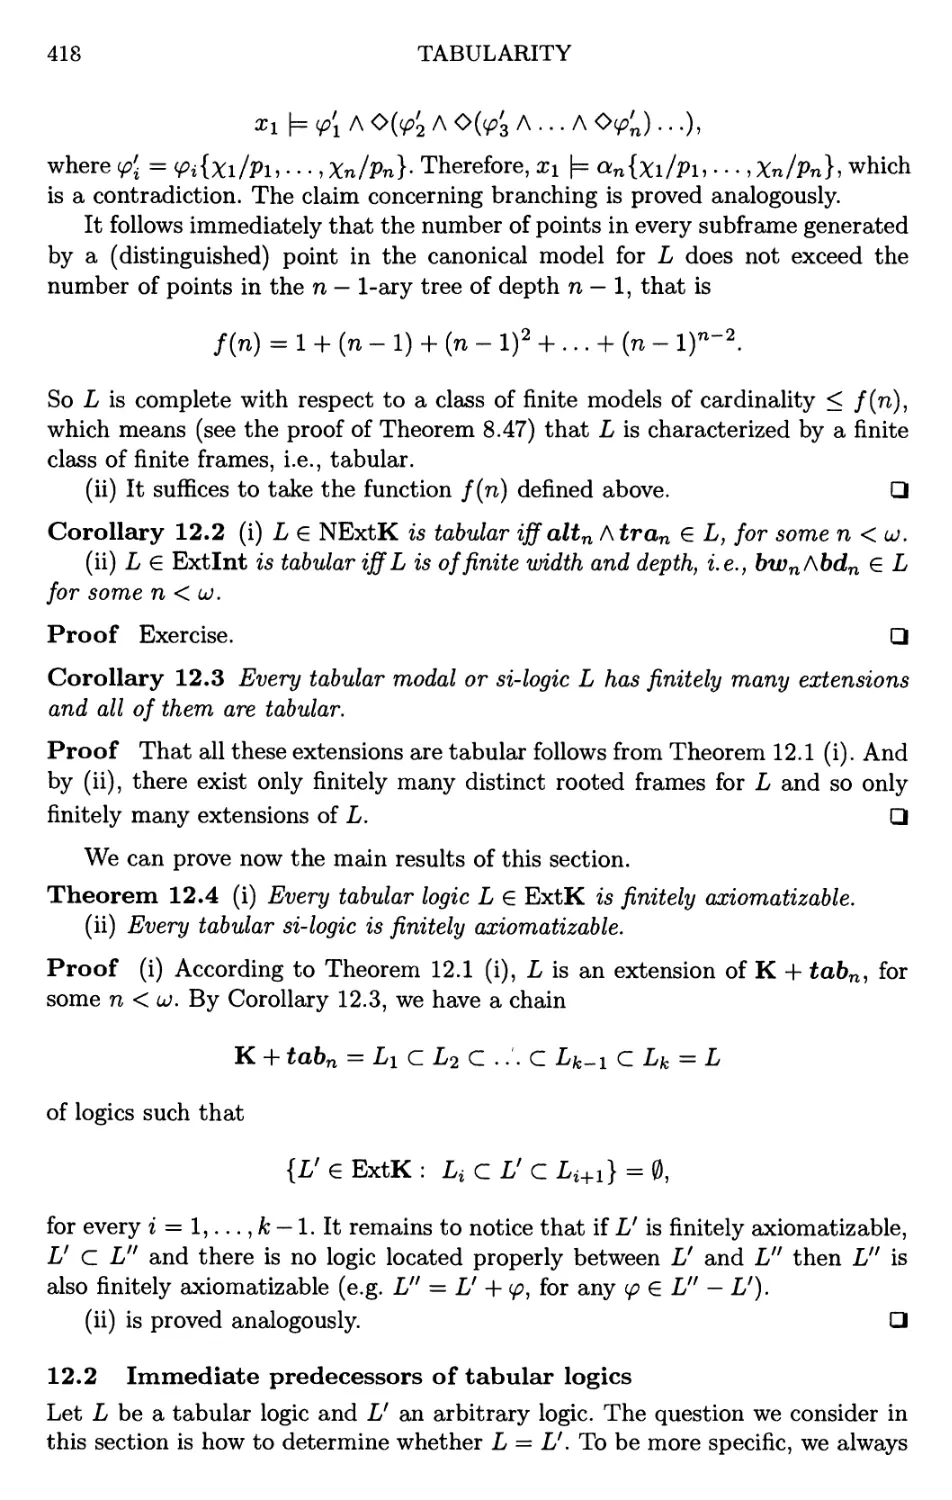 12.2 Immediate predecessors of tabular logics